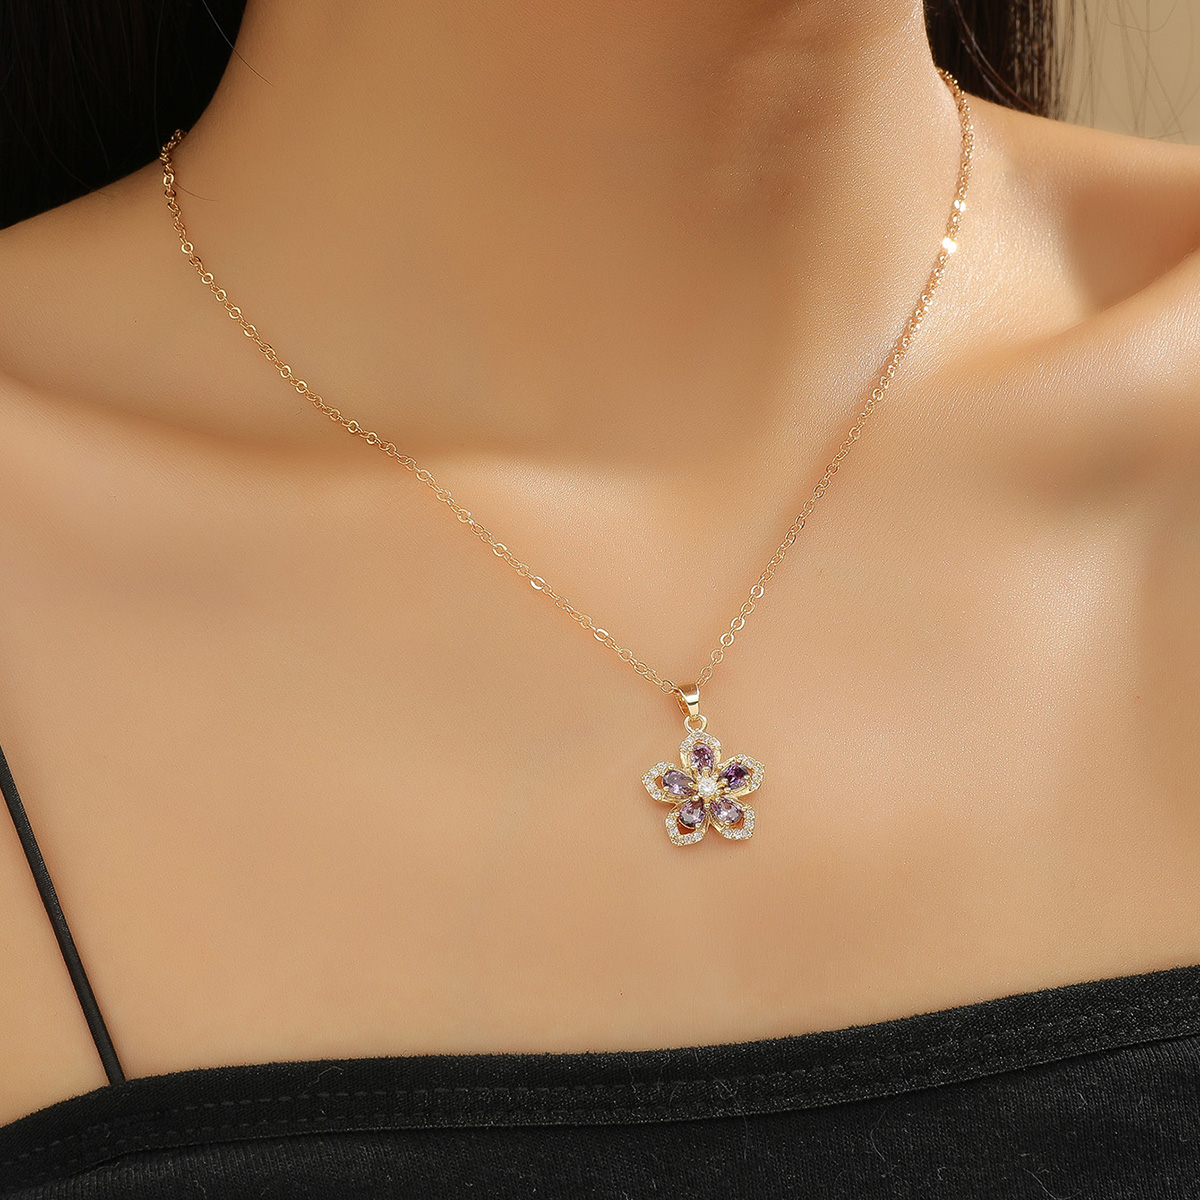 10pcs Amethyst Purple Crystal Flower Pendant Necklace Gold Tone|GCJ287|UK SELLER